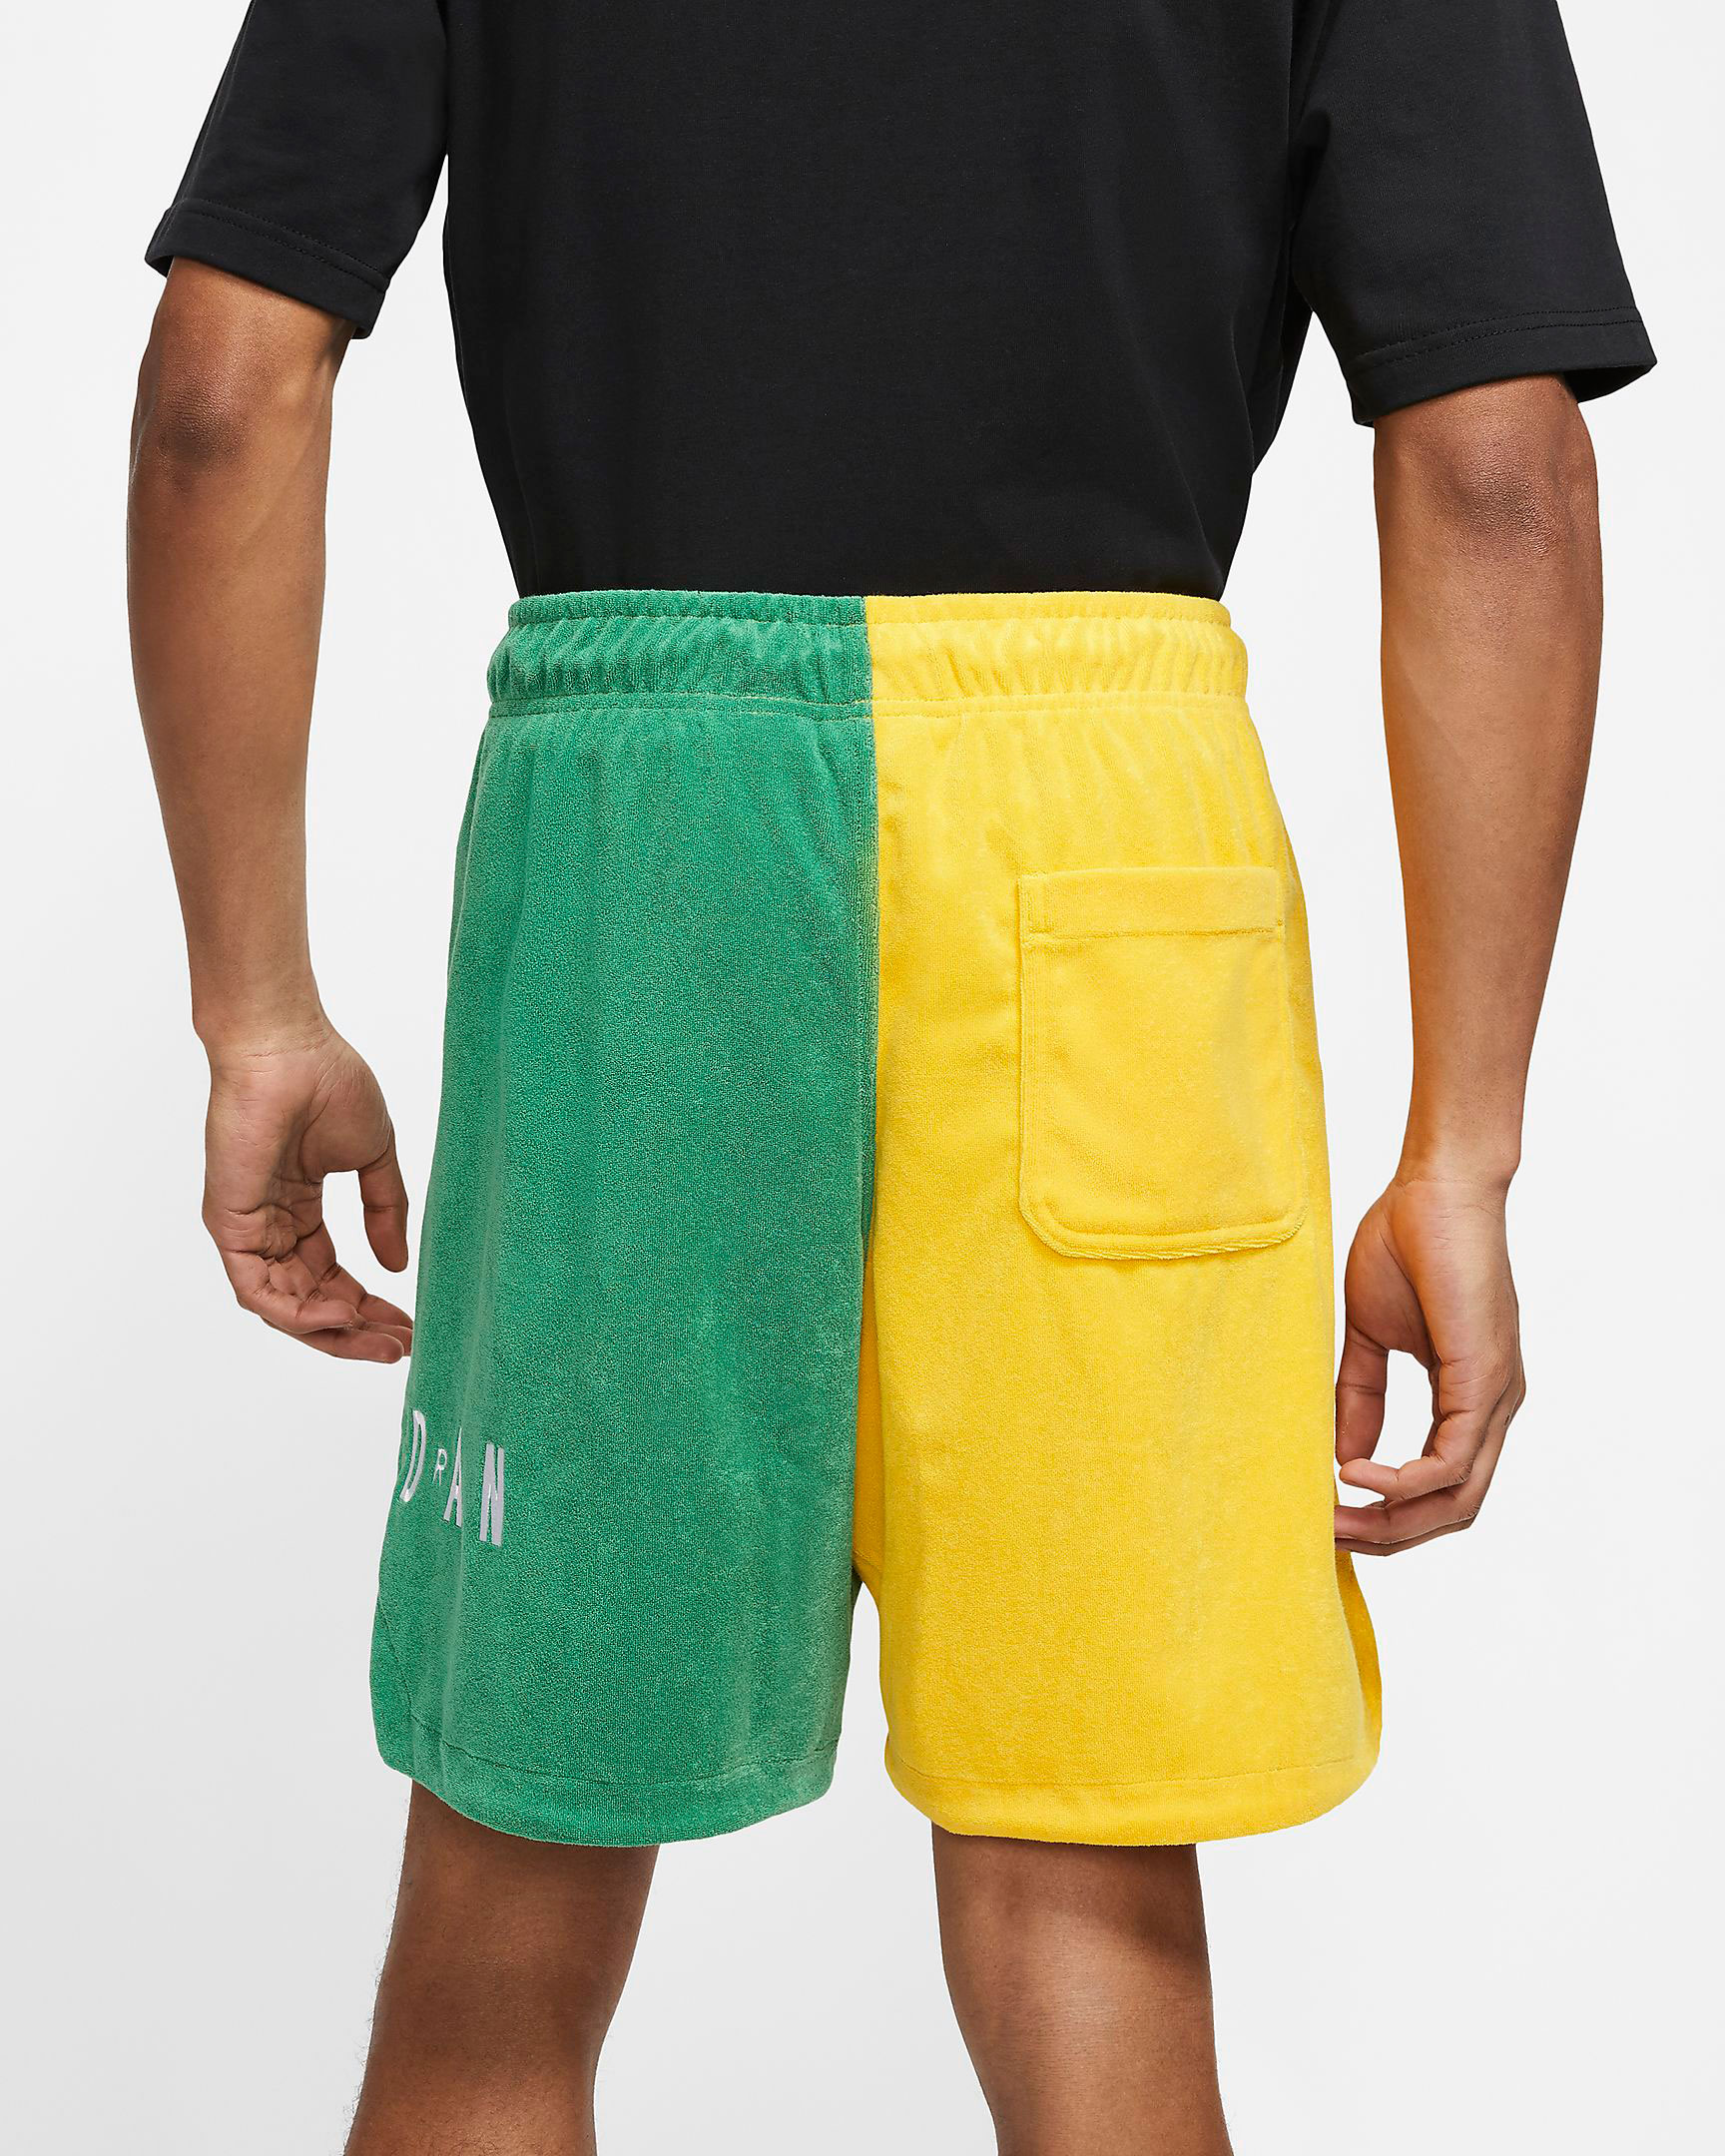 nike-dunk-low-brazil-shorts-match-3